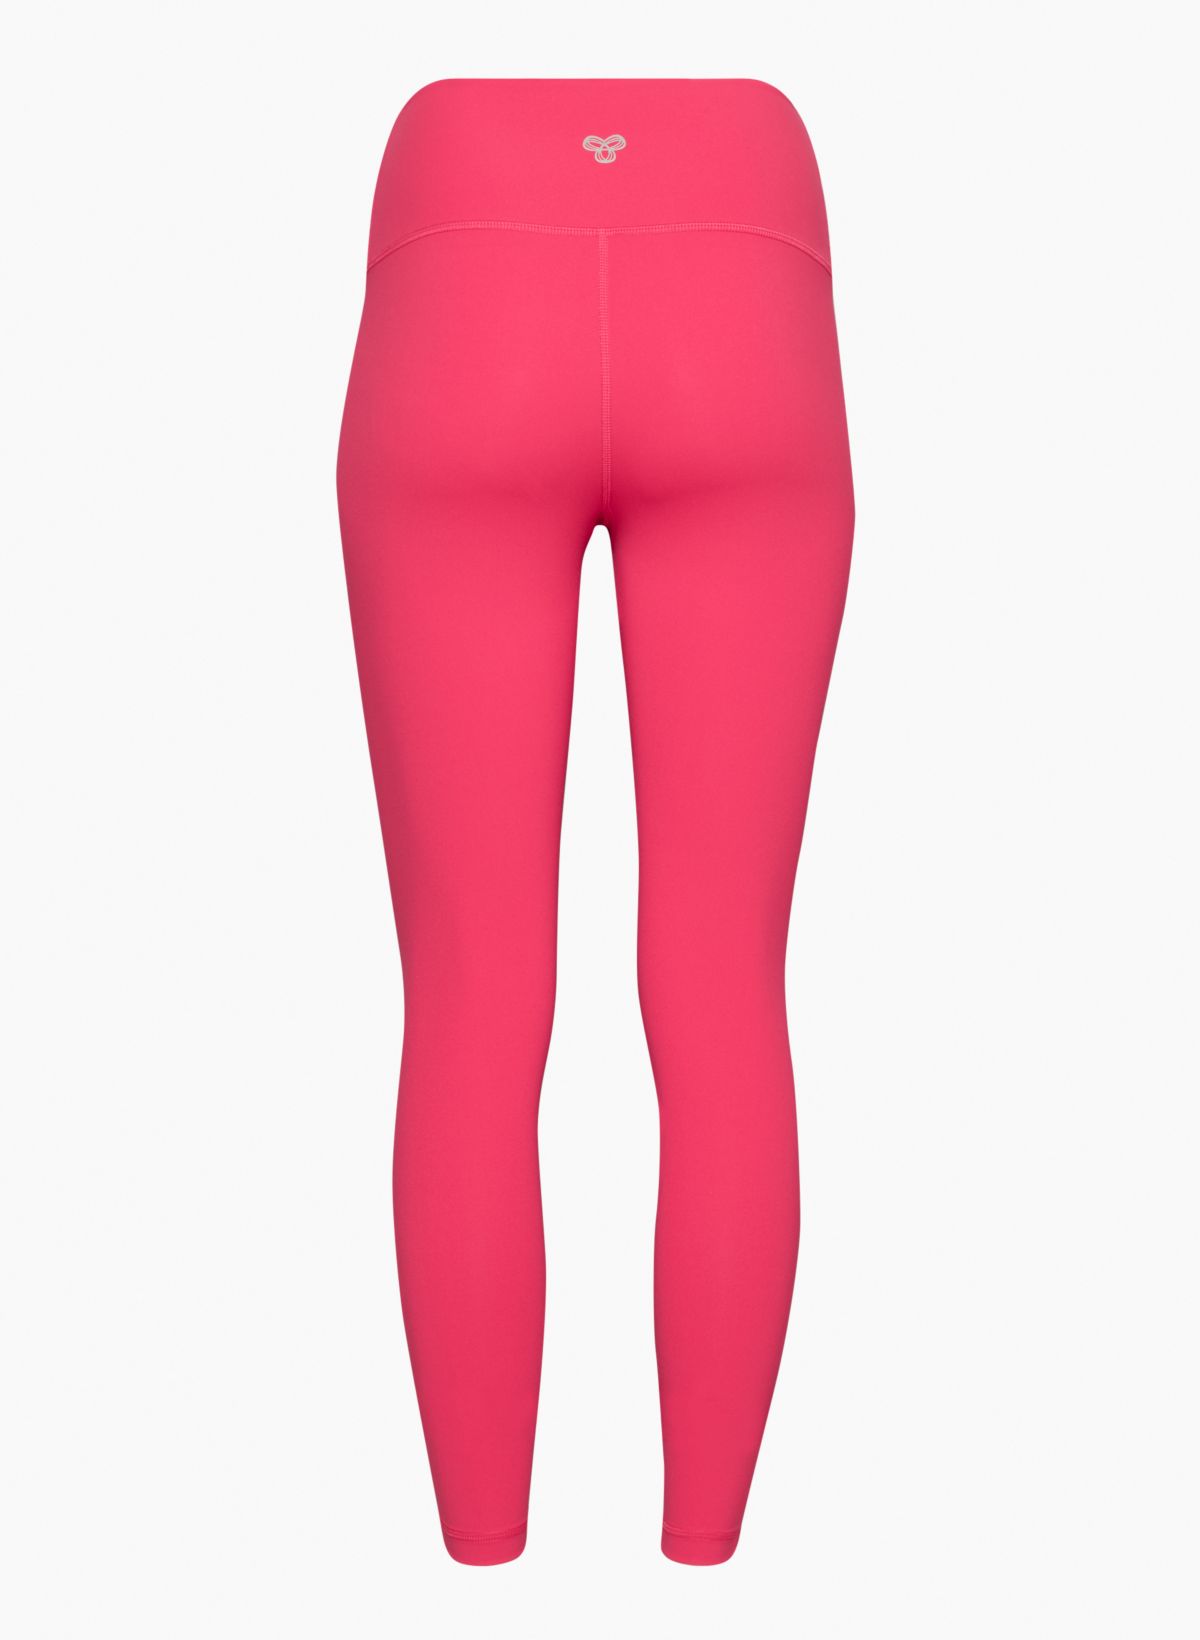 lululemon athletica, Pants & Jumpsuits, Hot Pink Leggings 23 Inch Inseam